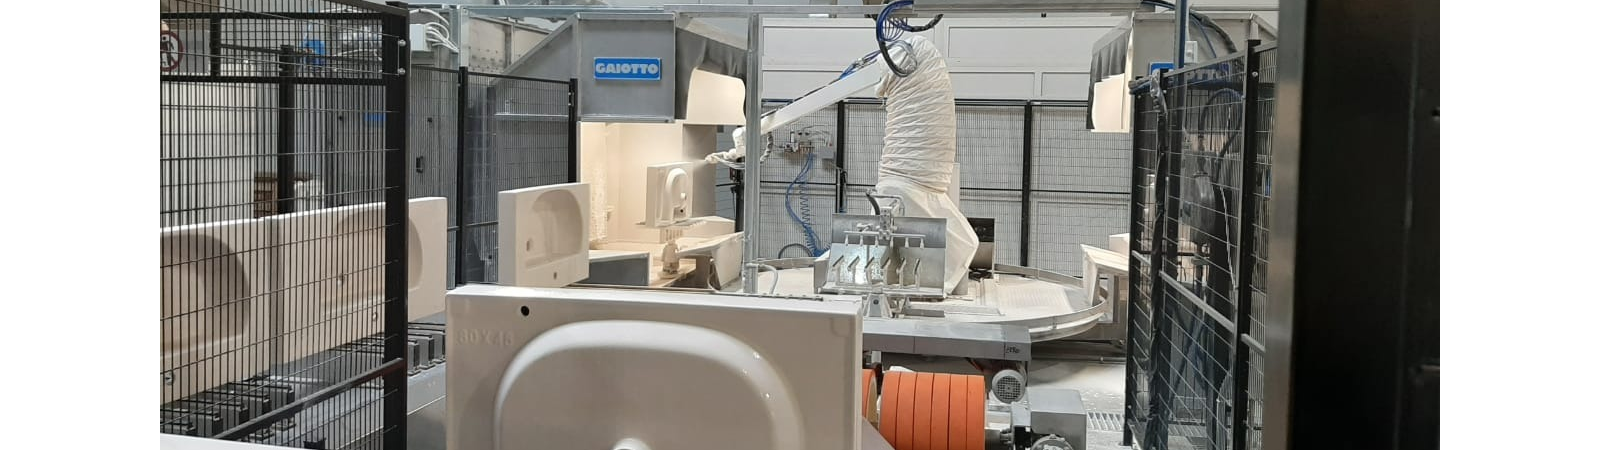 Kerama Marazzi gets into sanitaryware with Gaiotto robotized glazing